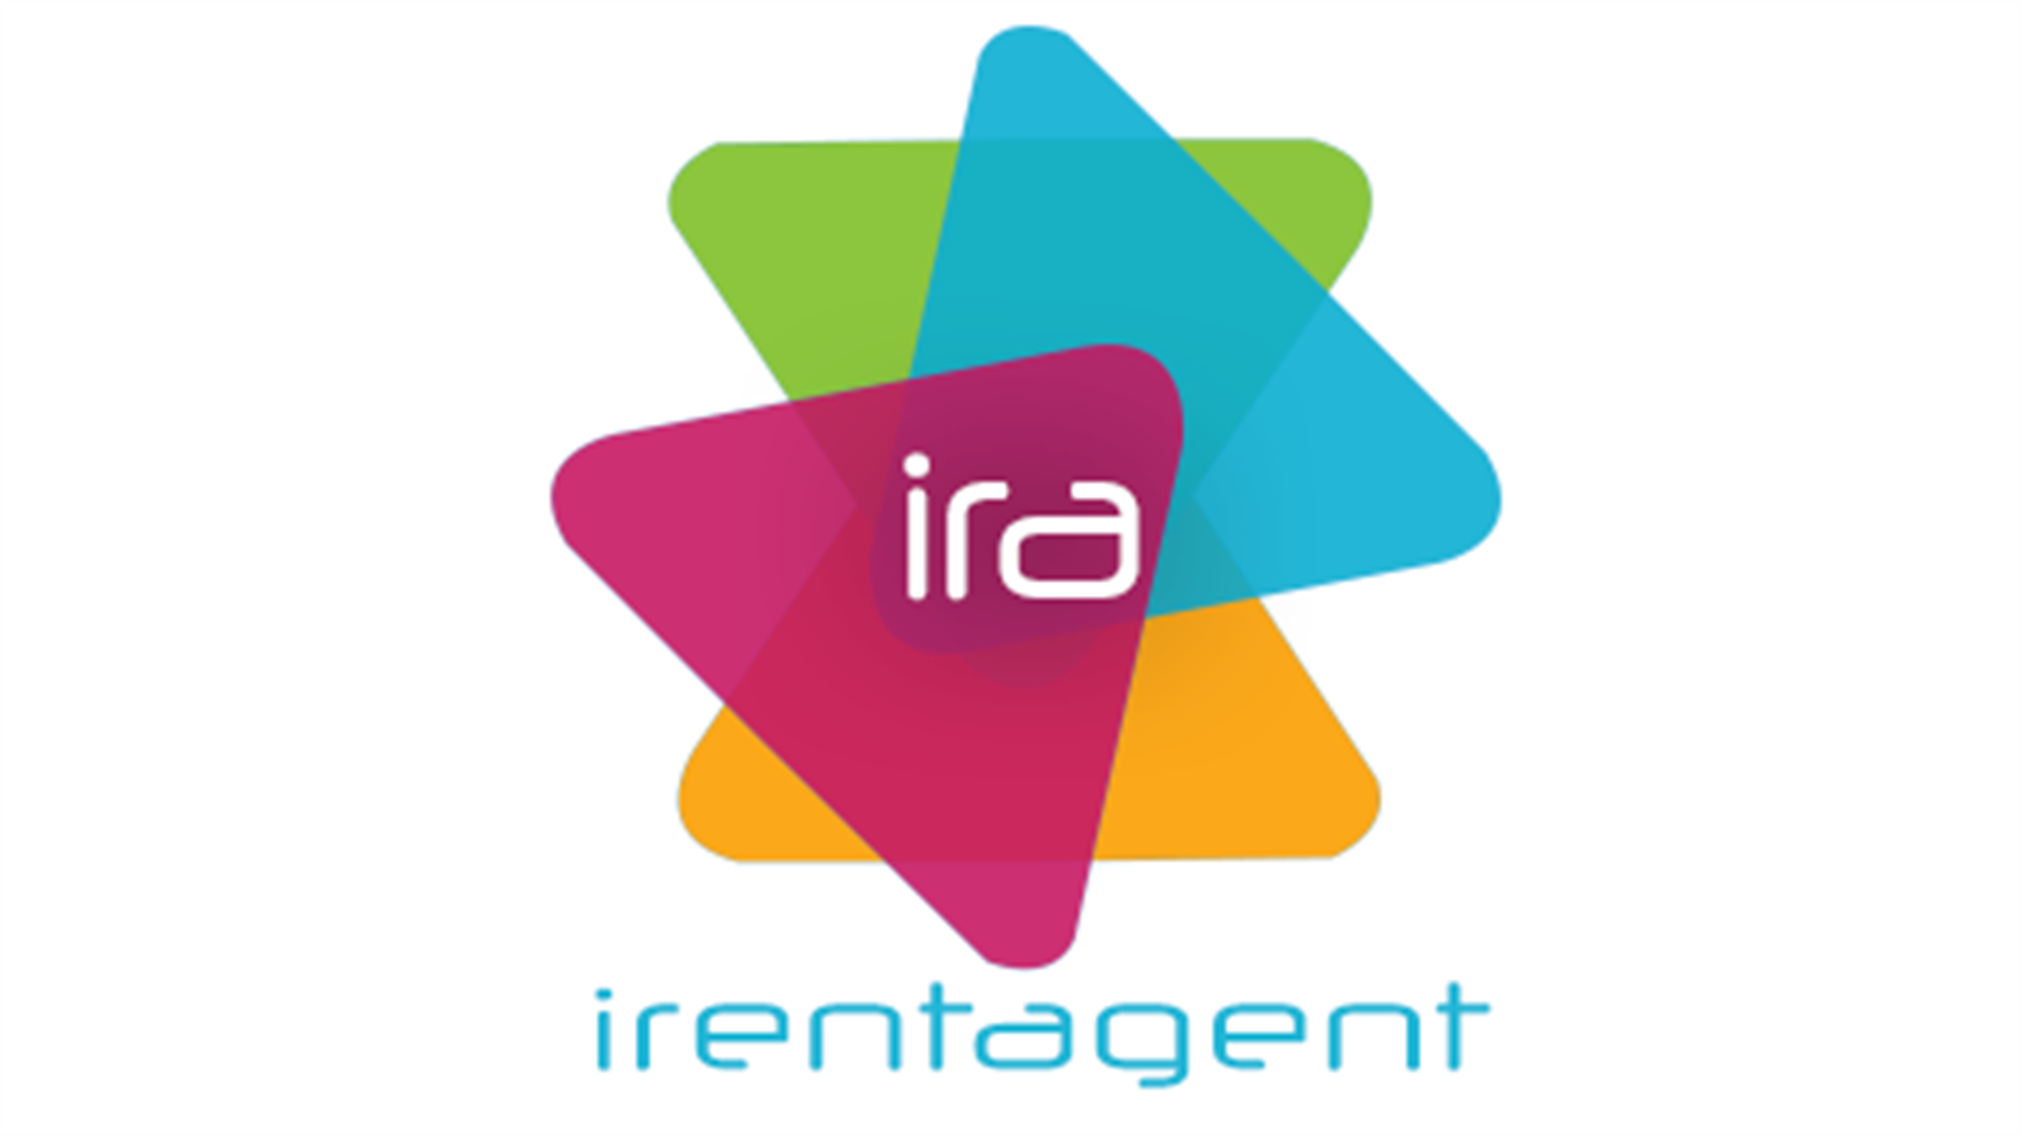 iRentAgent